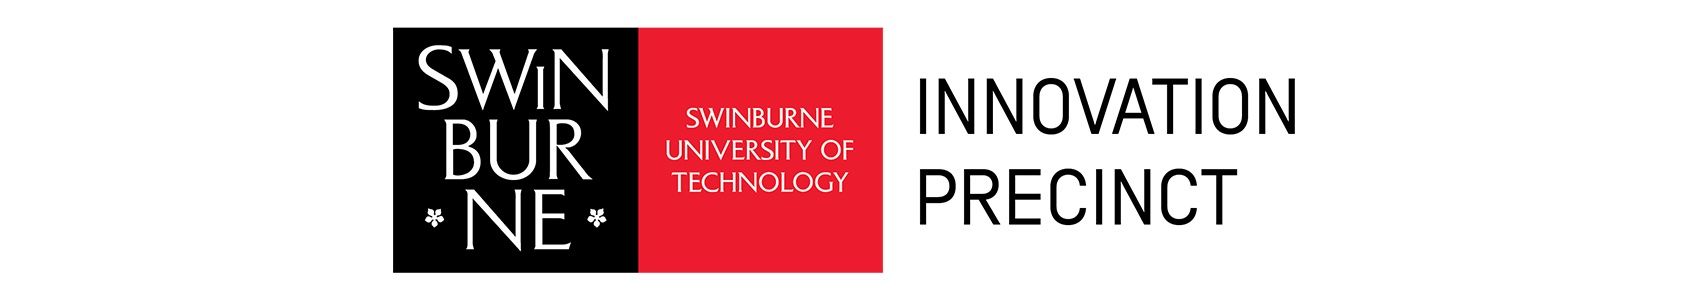 Swinburne Innovation Precinct logo